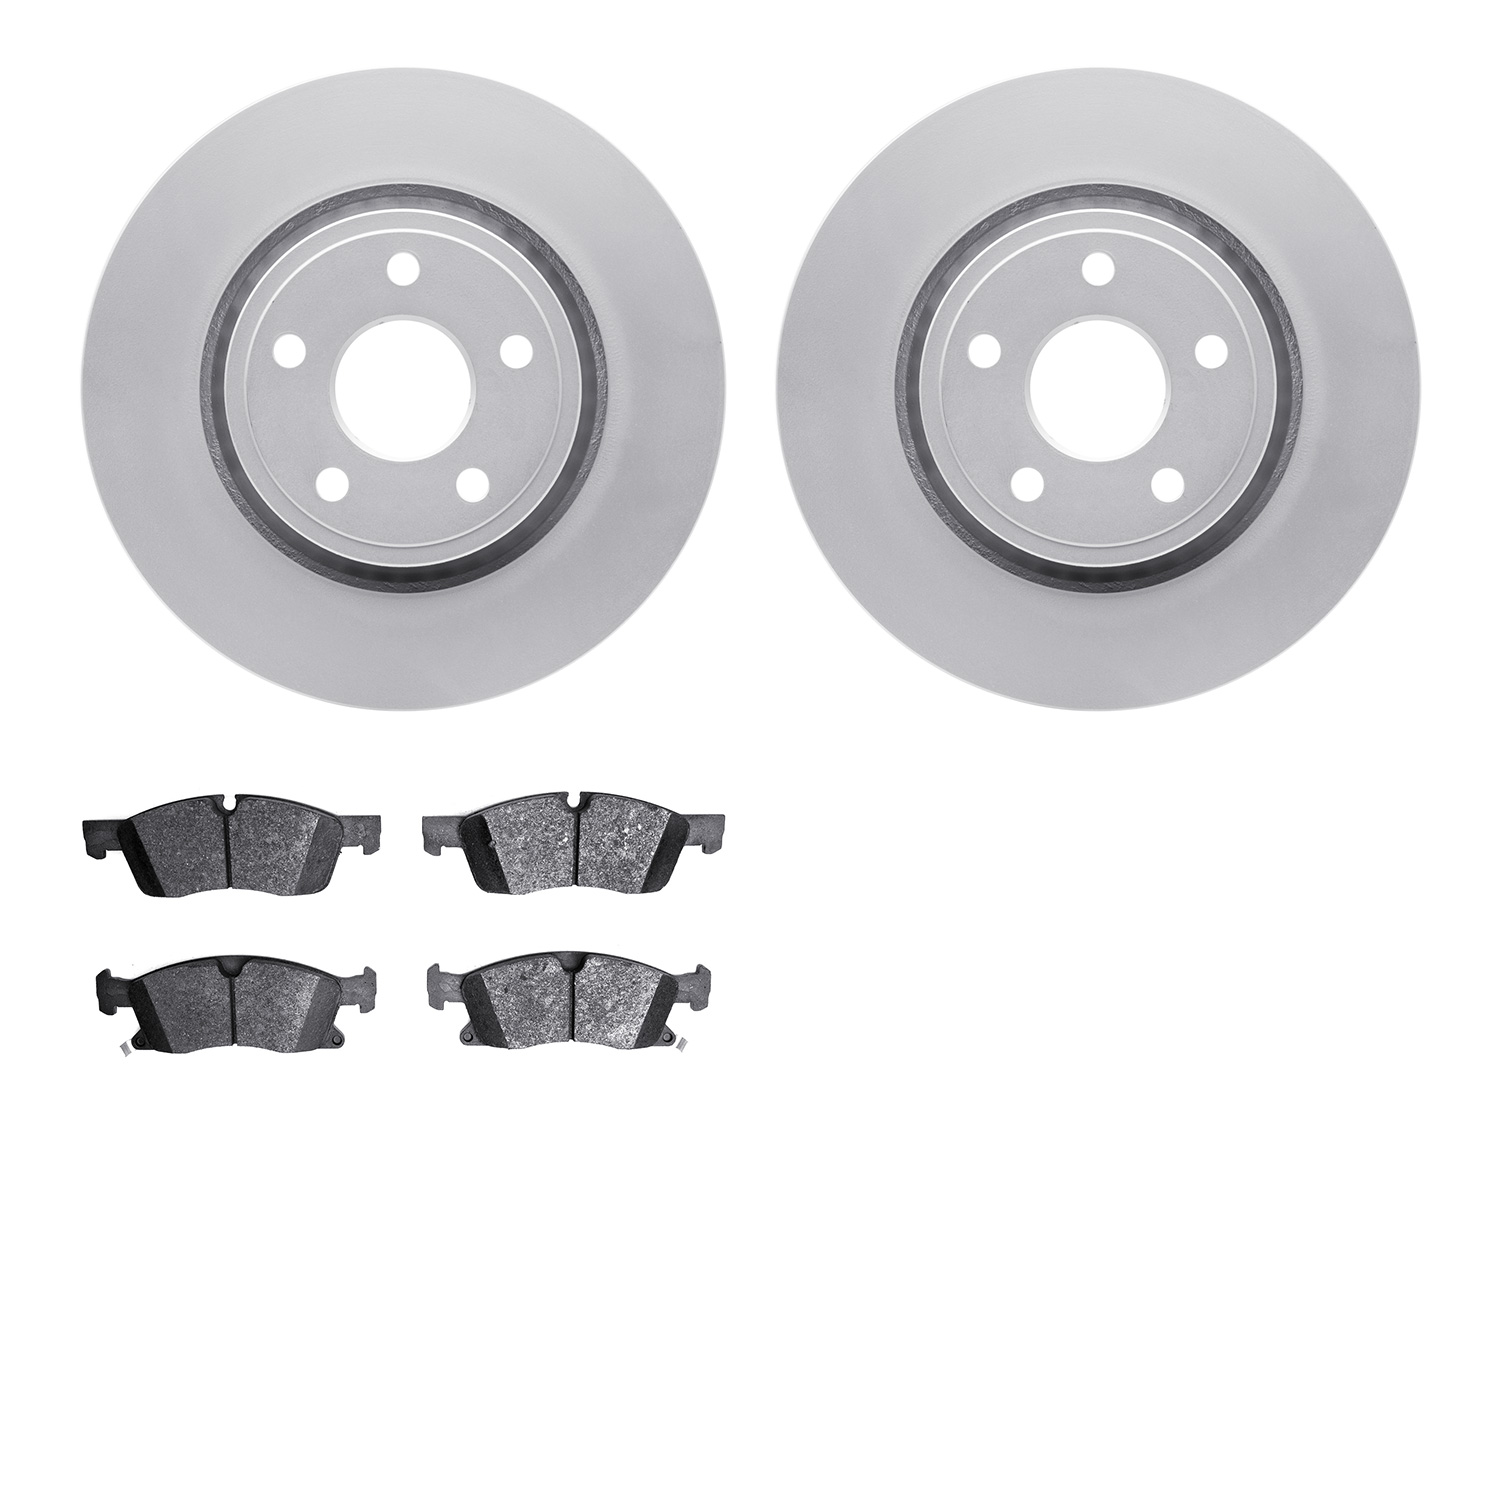 4402-42008 Geospec Brake Rotors with Ultimate-Duty Brake Pads Kit, Fits Select Mopar, Position: Front